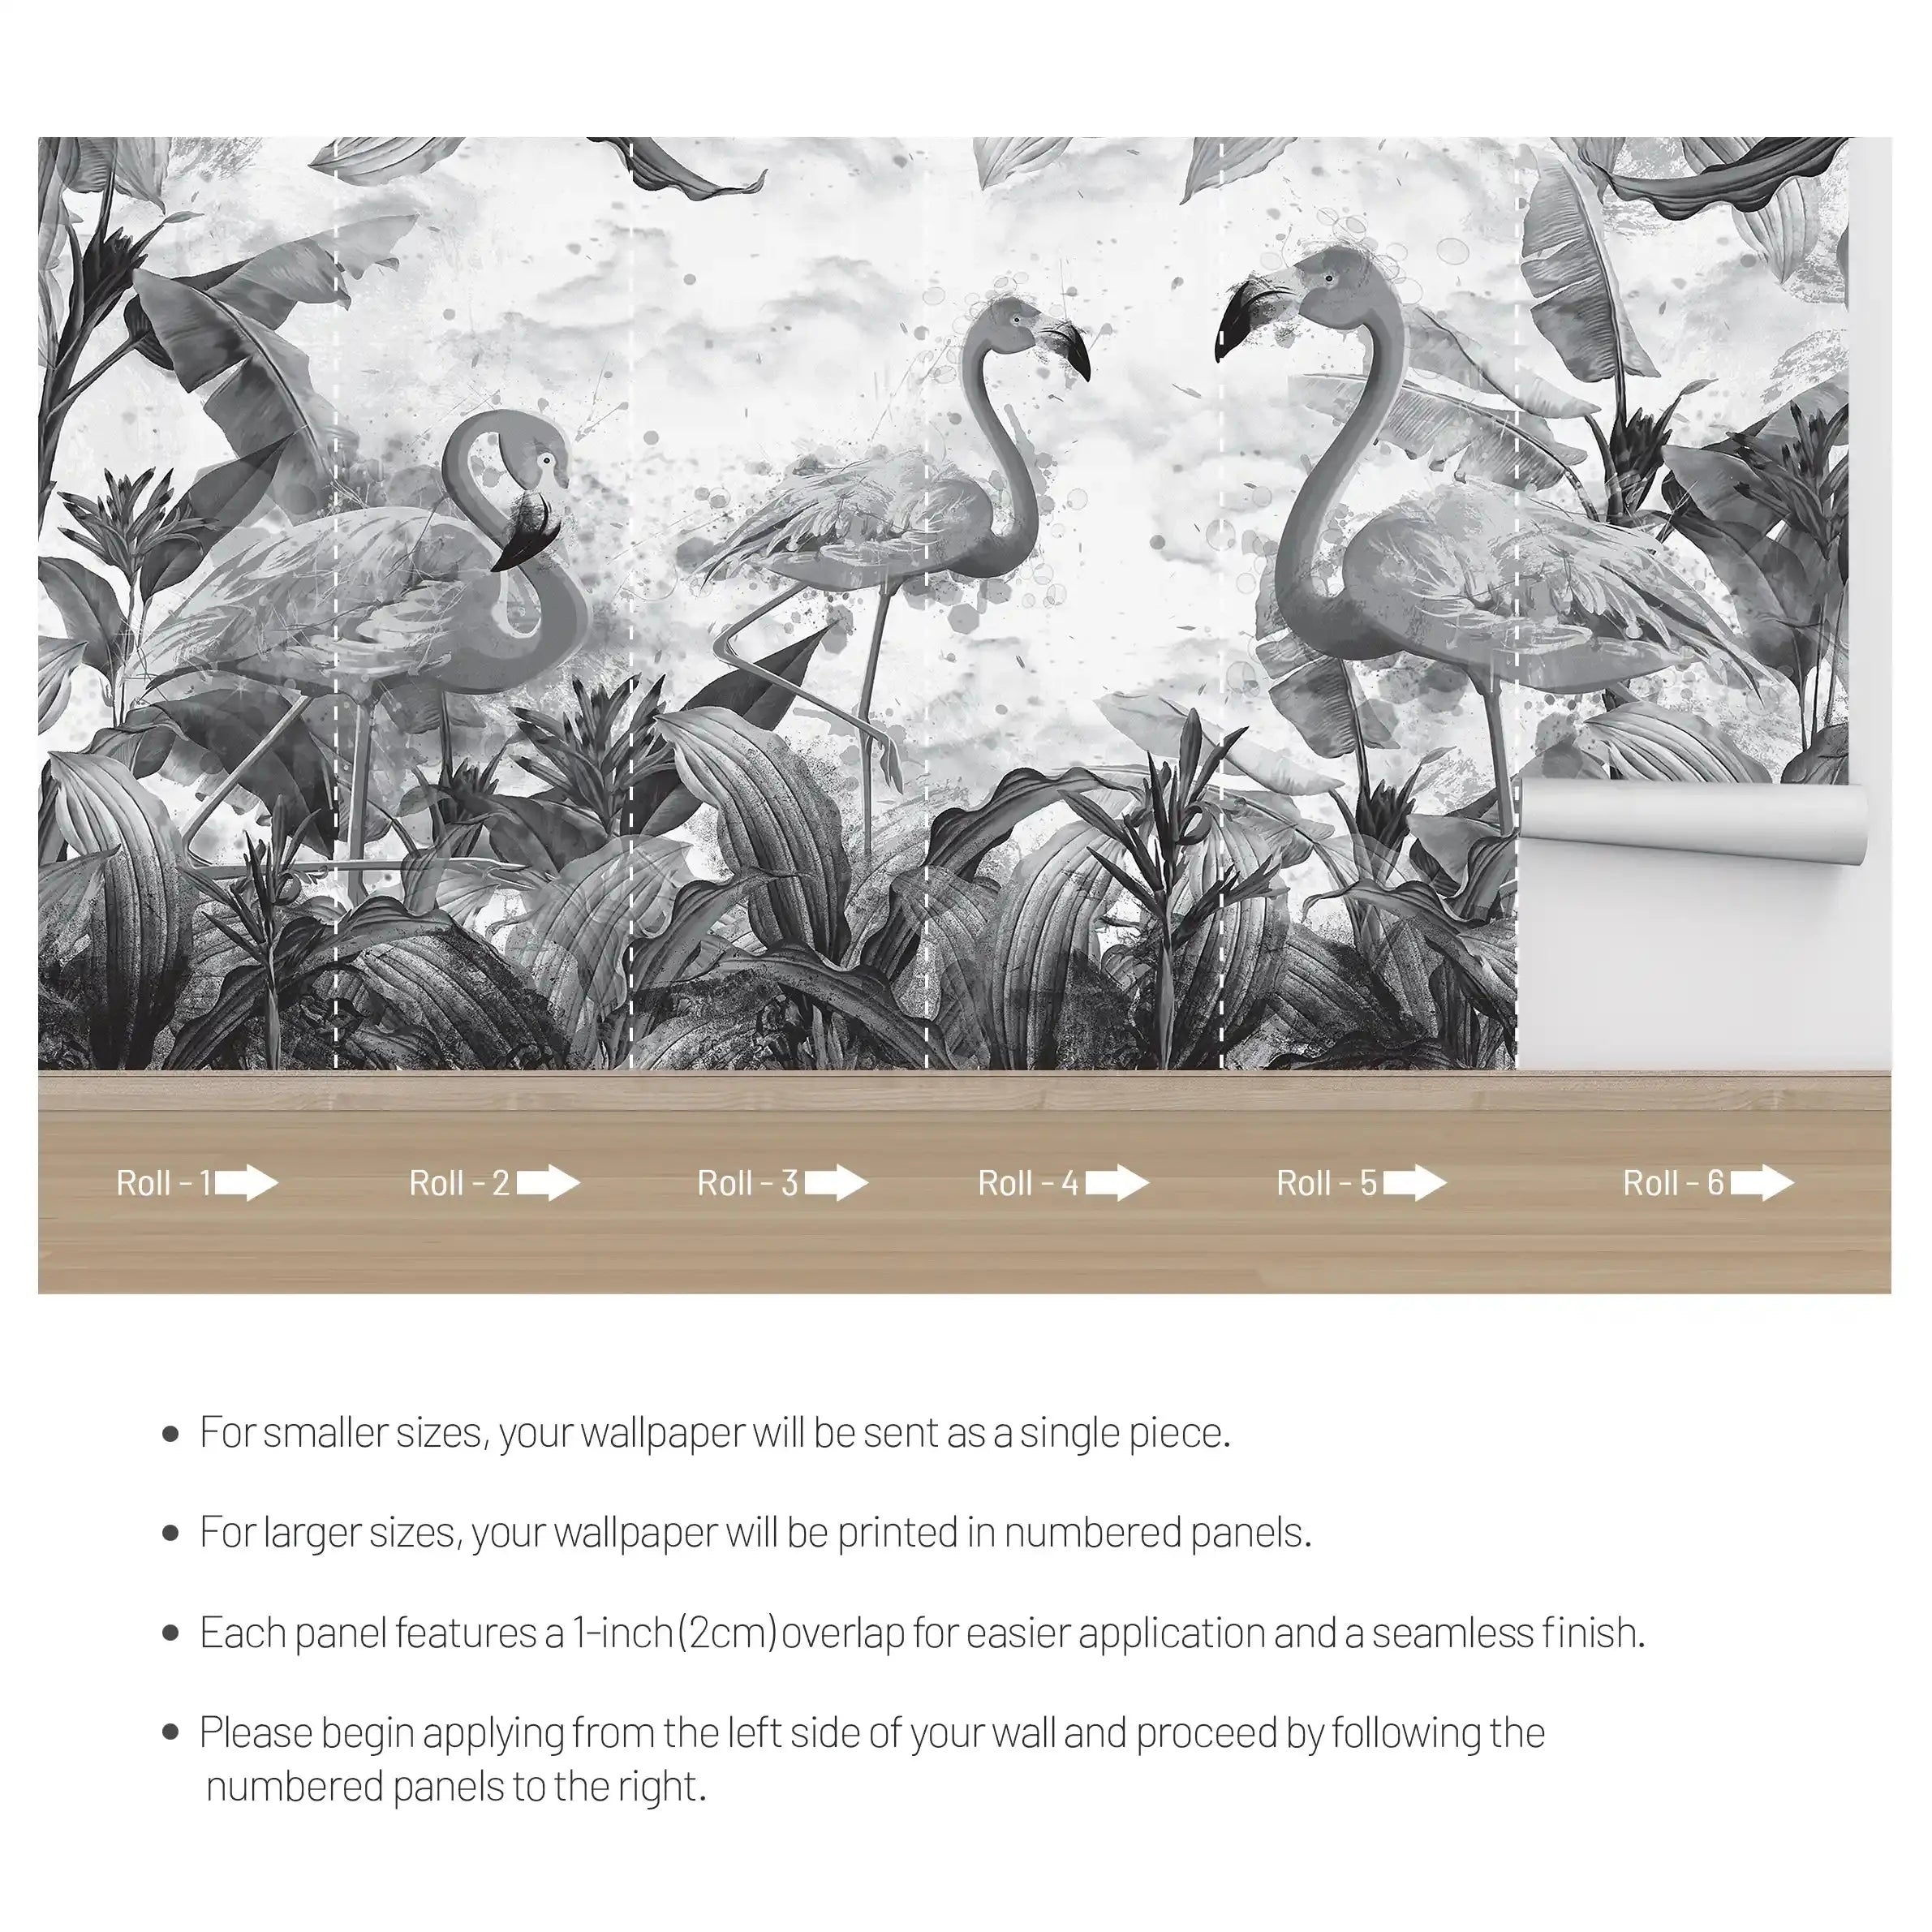 3069-E / Tropical Peel & Stick Wallpaper – Vibrant Grey Flamingo and Leaf Design for DIY Home Decor - Artevella